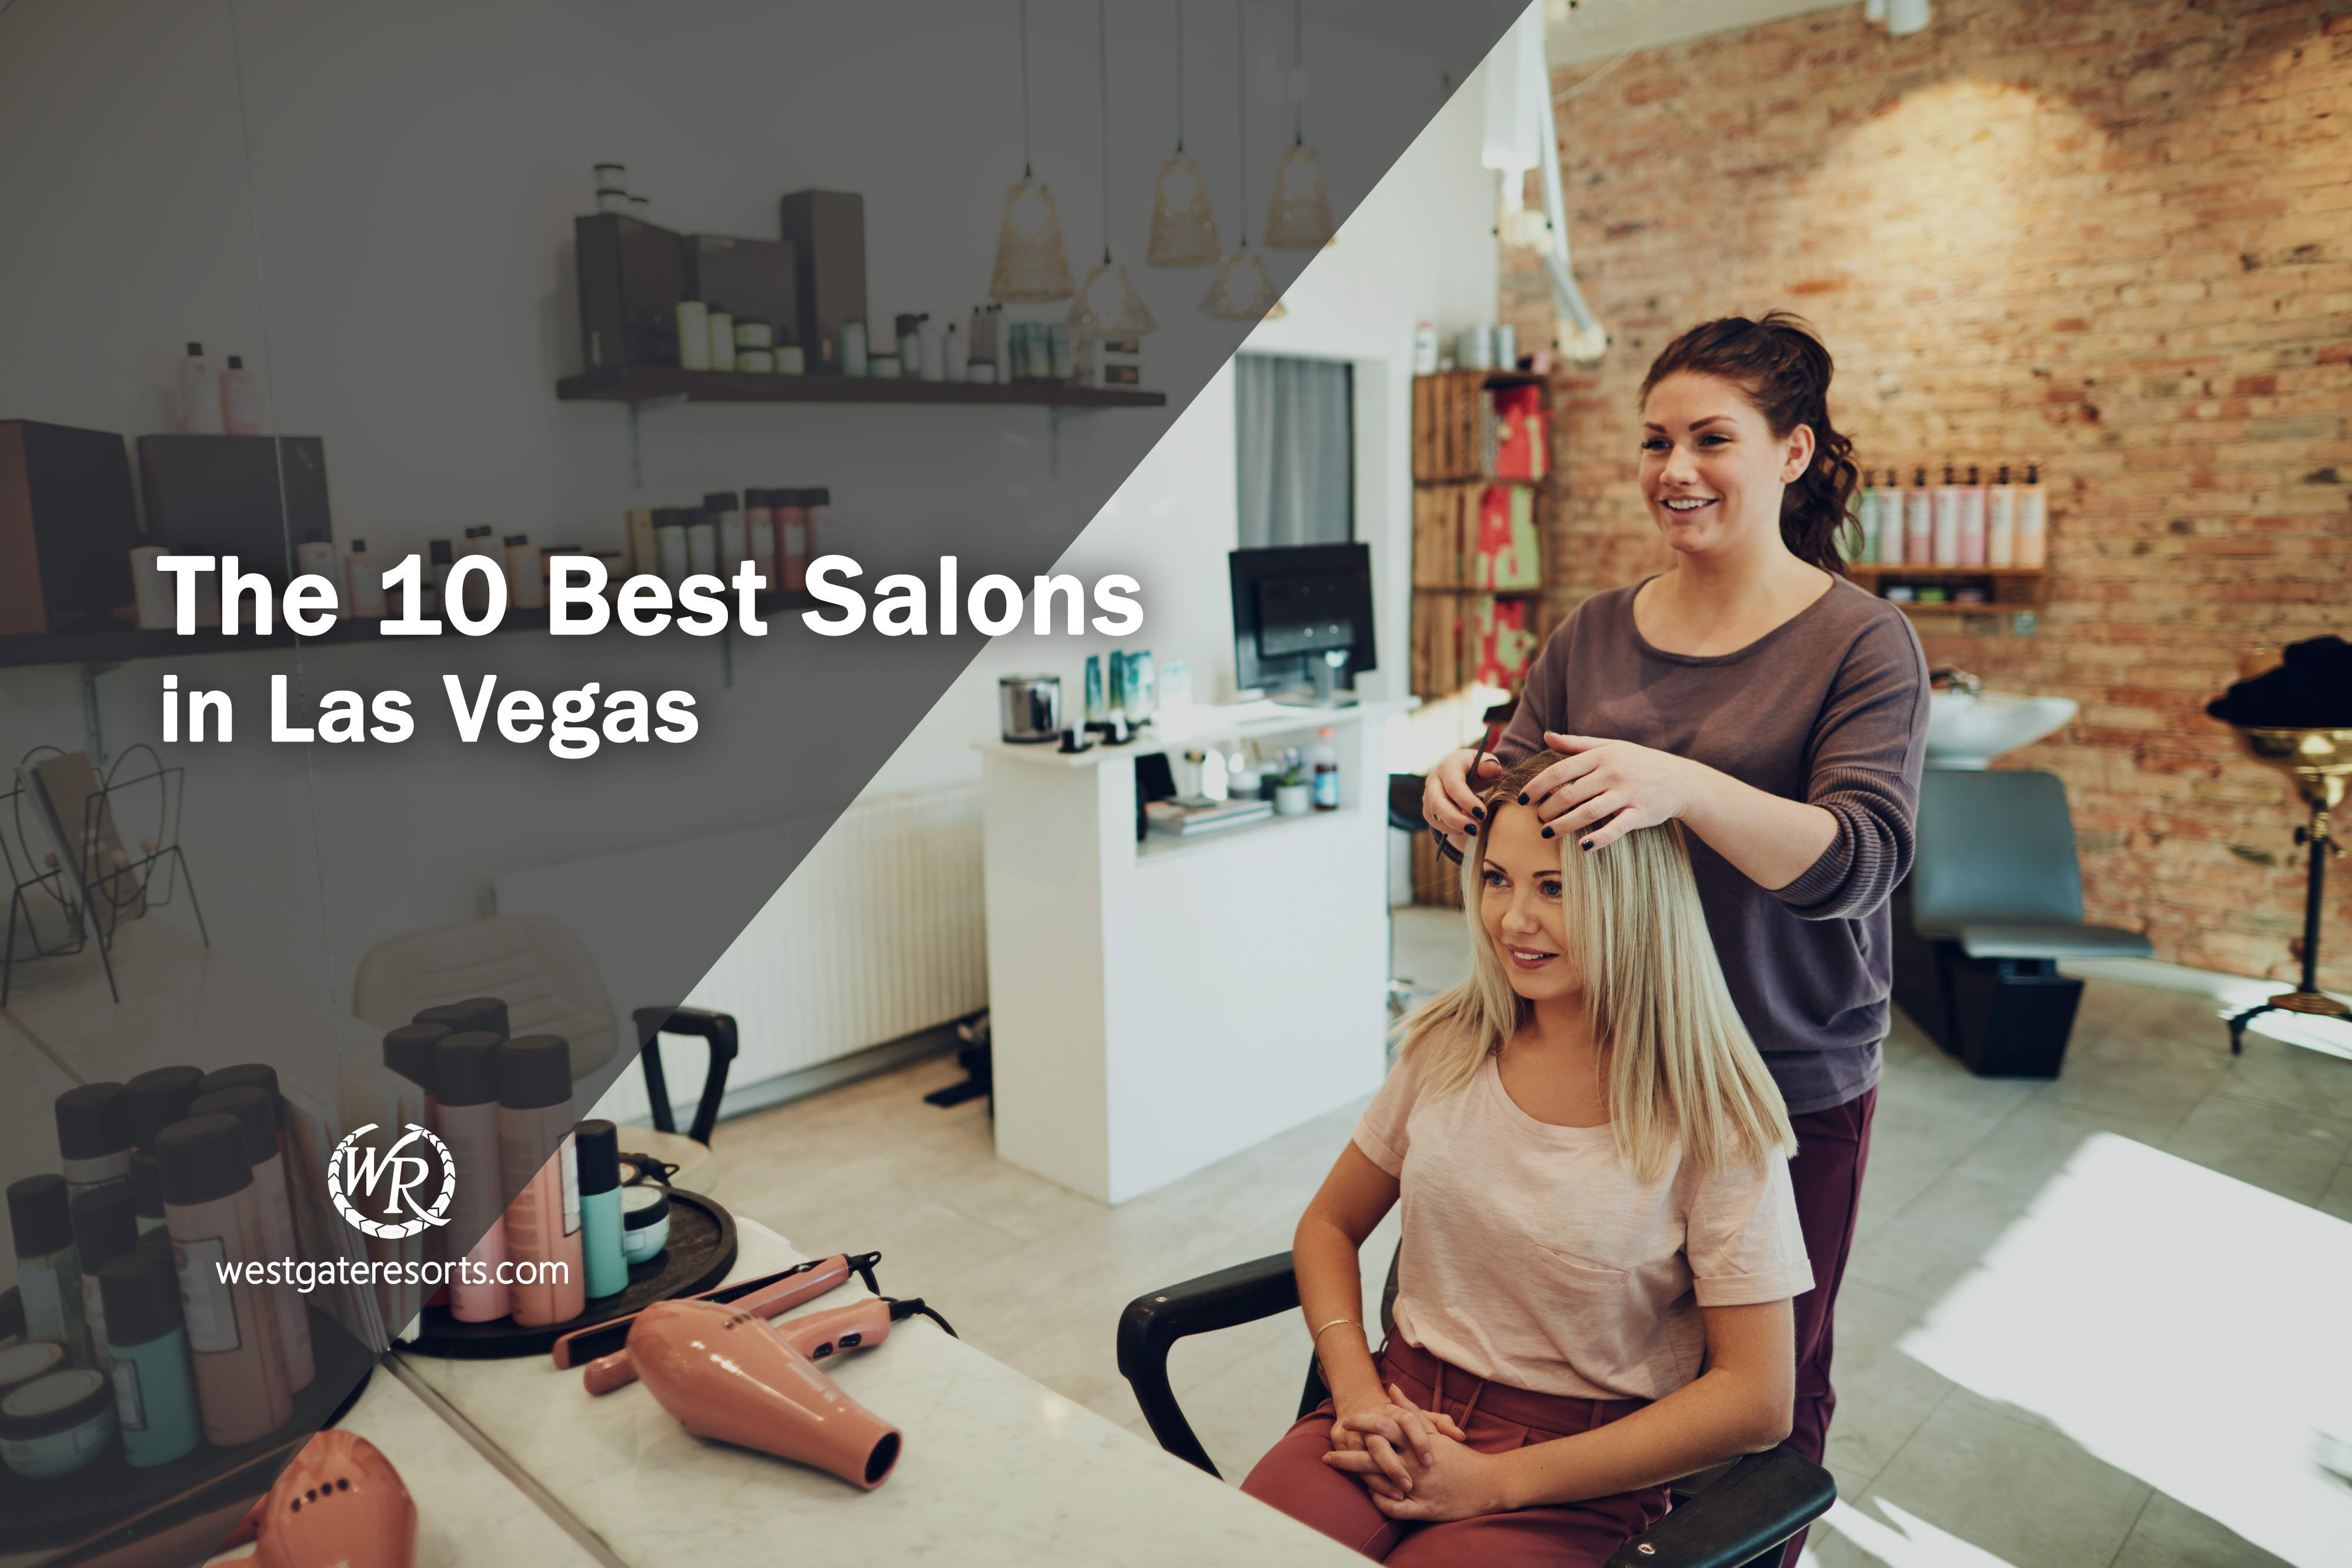 The 10 Best Salons in Las Vegas!